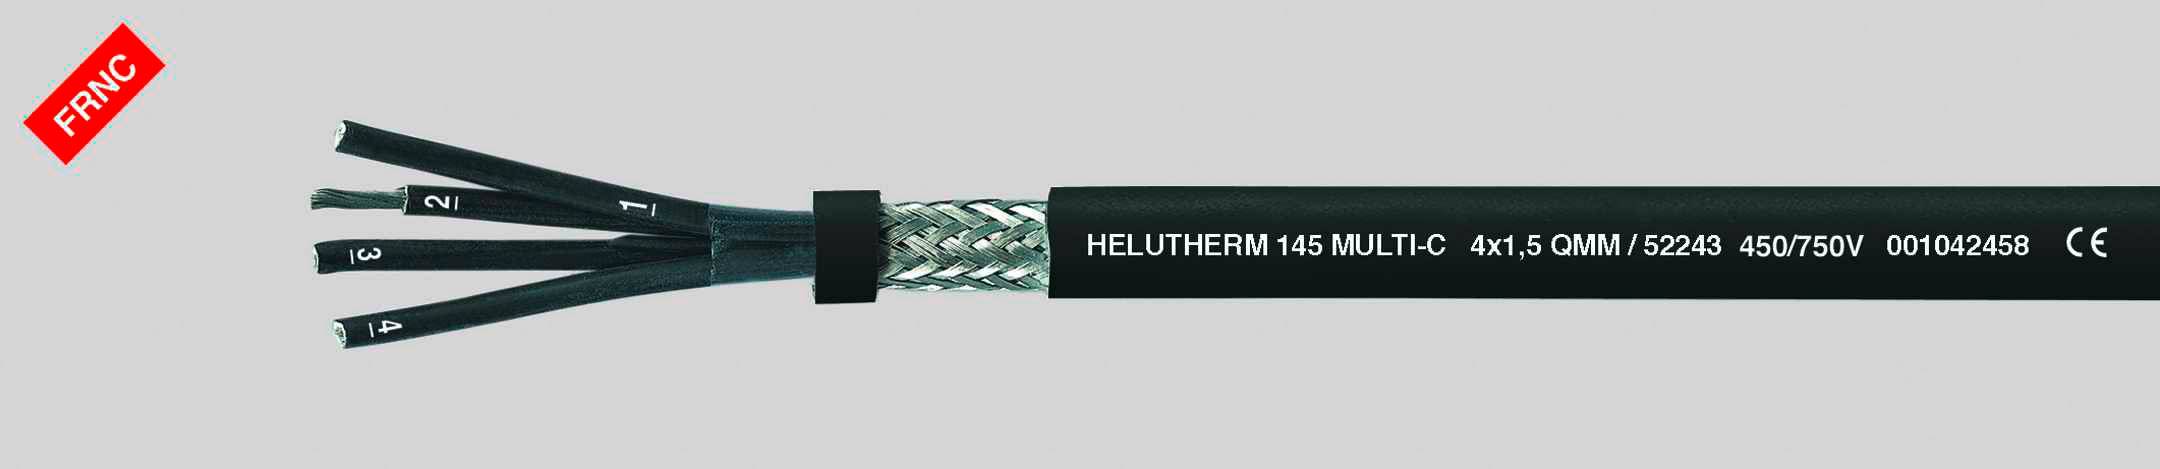 HELUKABEL HELUTHERM 145MULTI-C 4X1